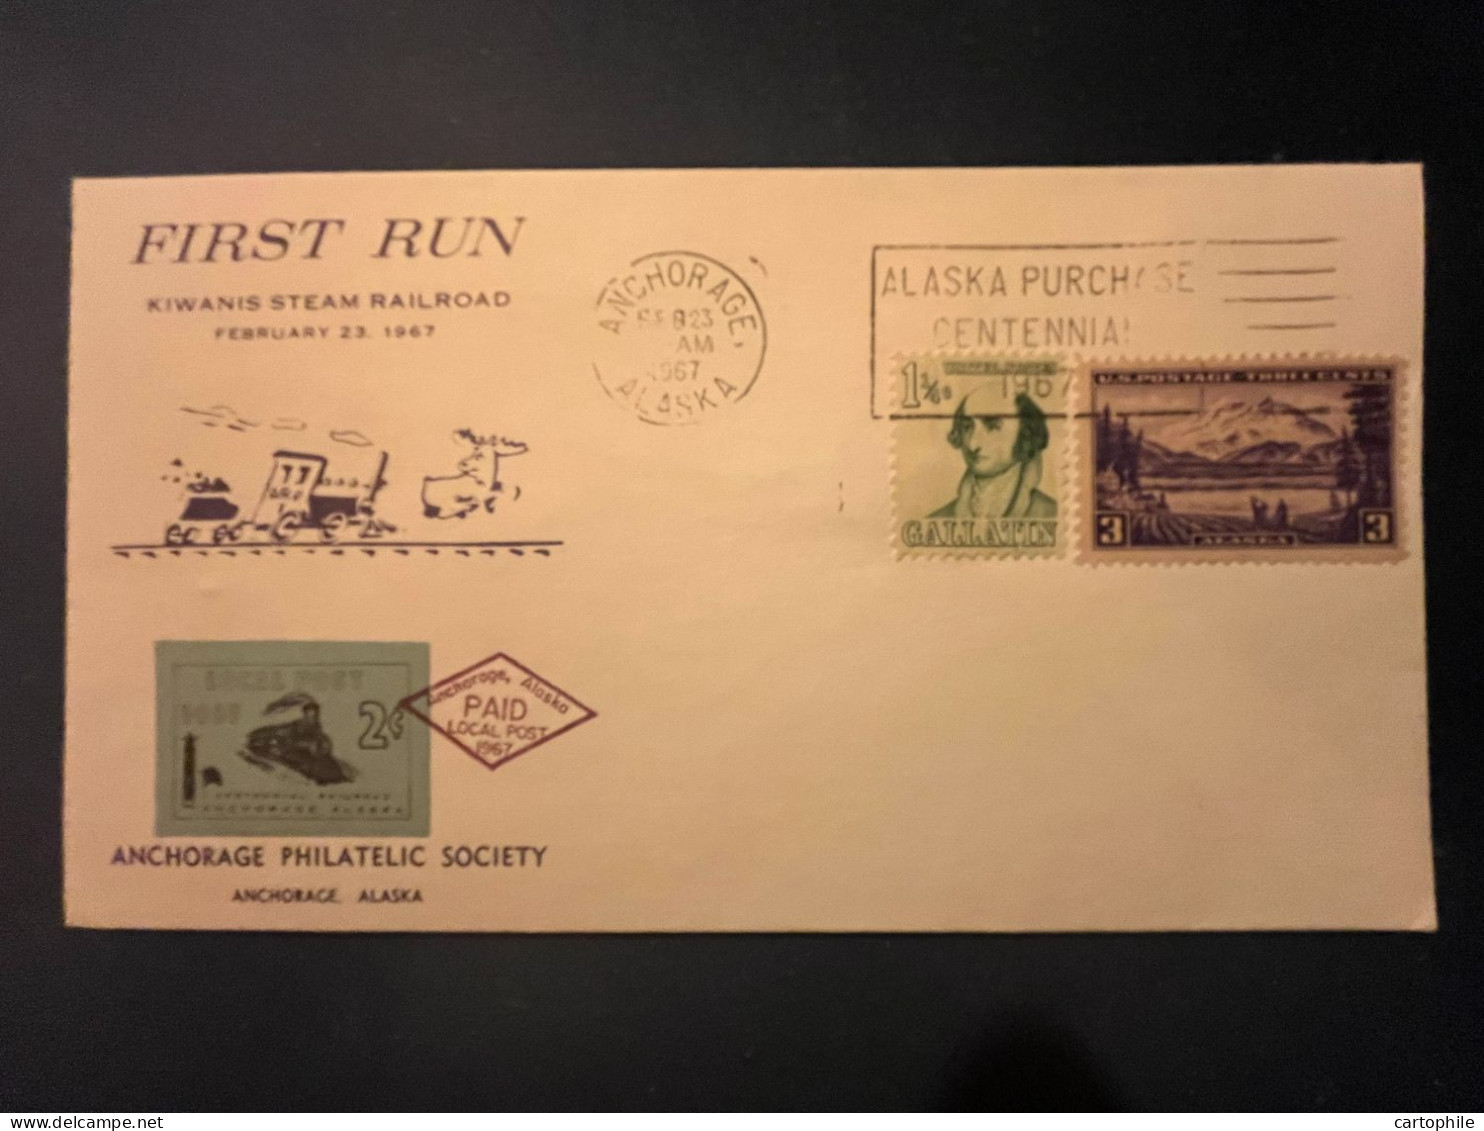 Local Post Anchorage Alaska - First Run Kiwanis Steam Railroad Cover 1967 - Timbre Local 2c Centennial Railroad - Briefe U. Dokumente